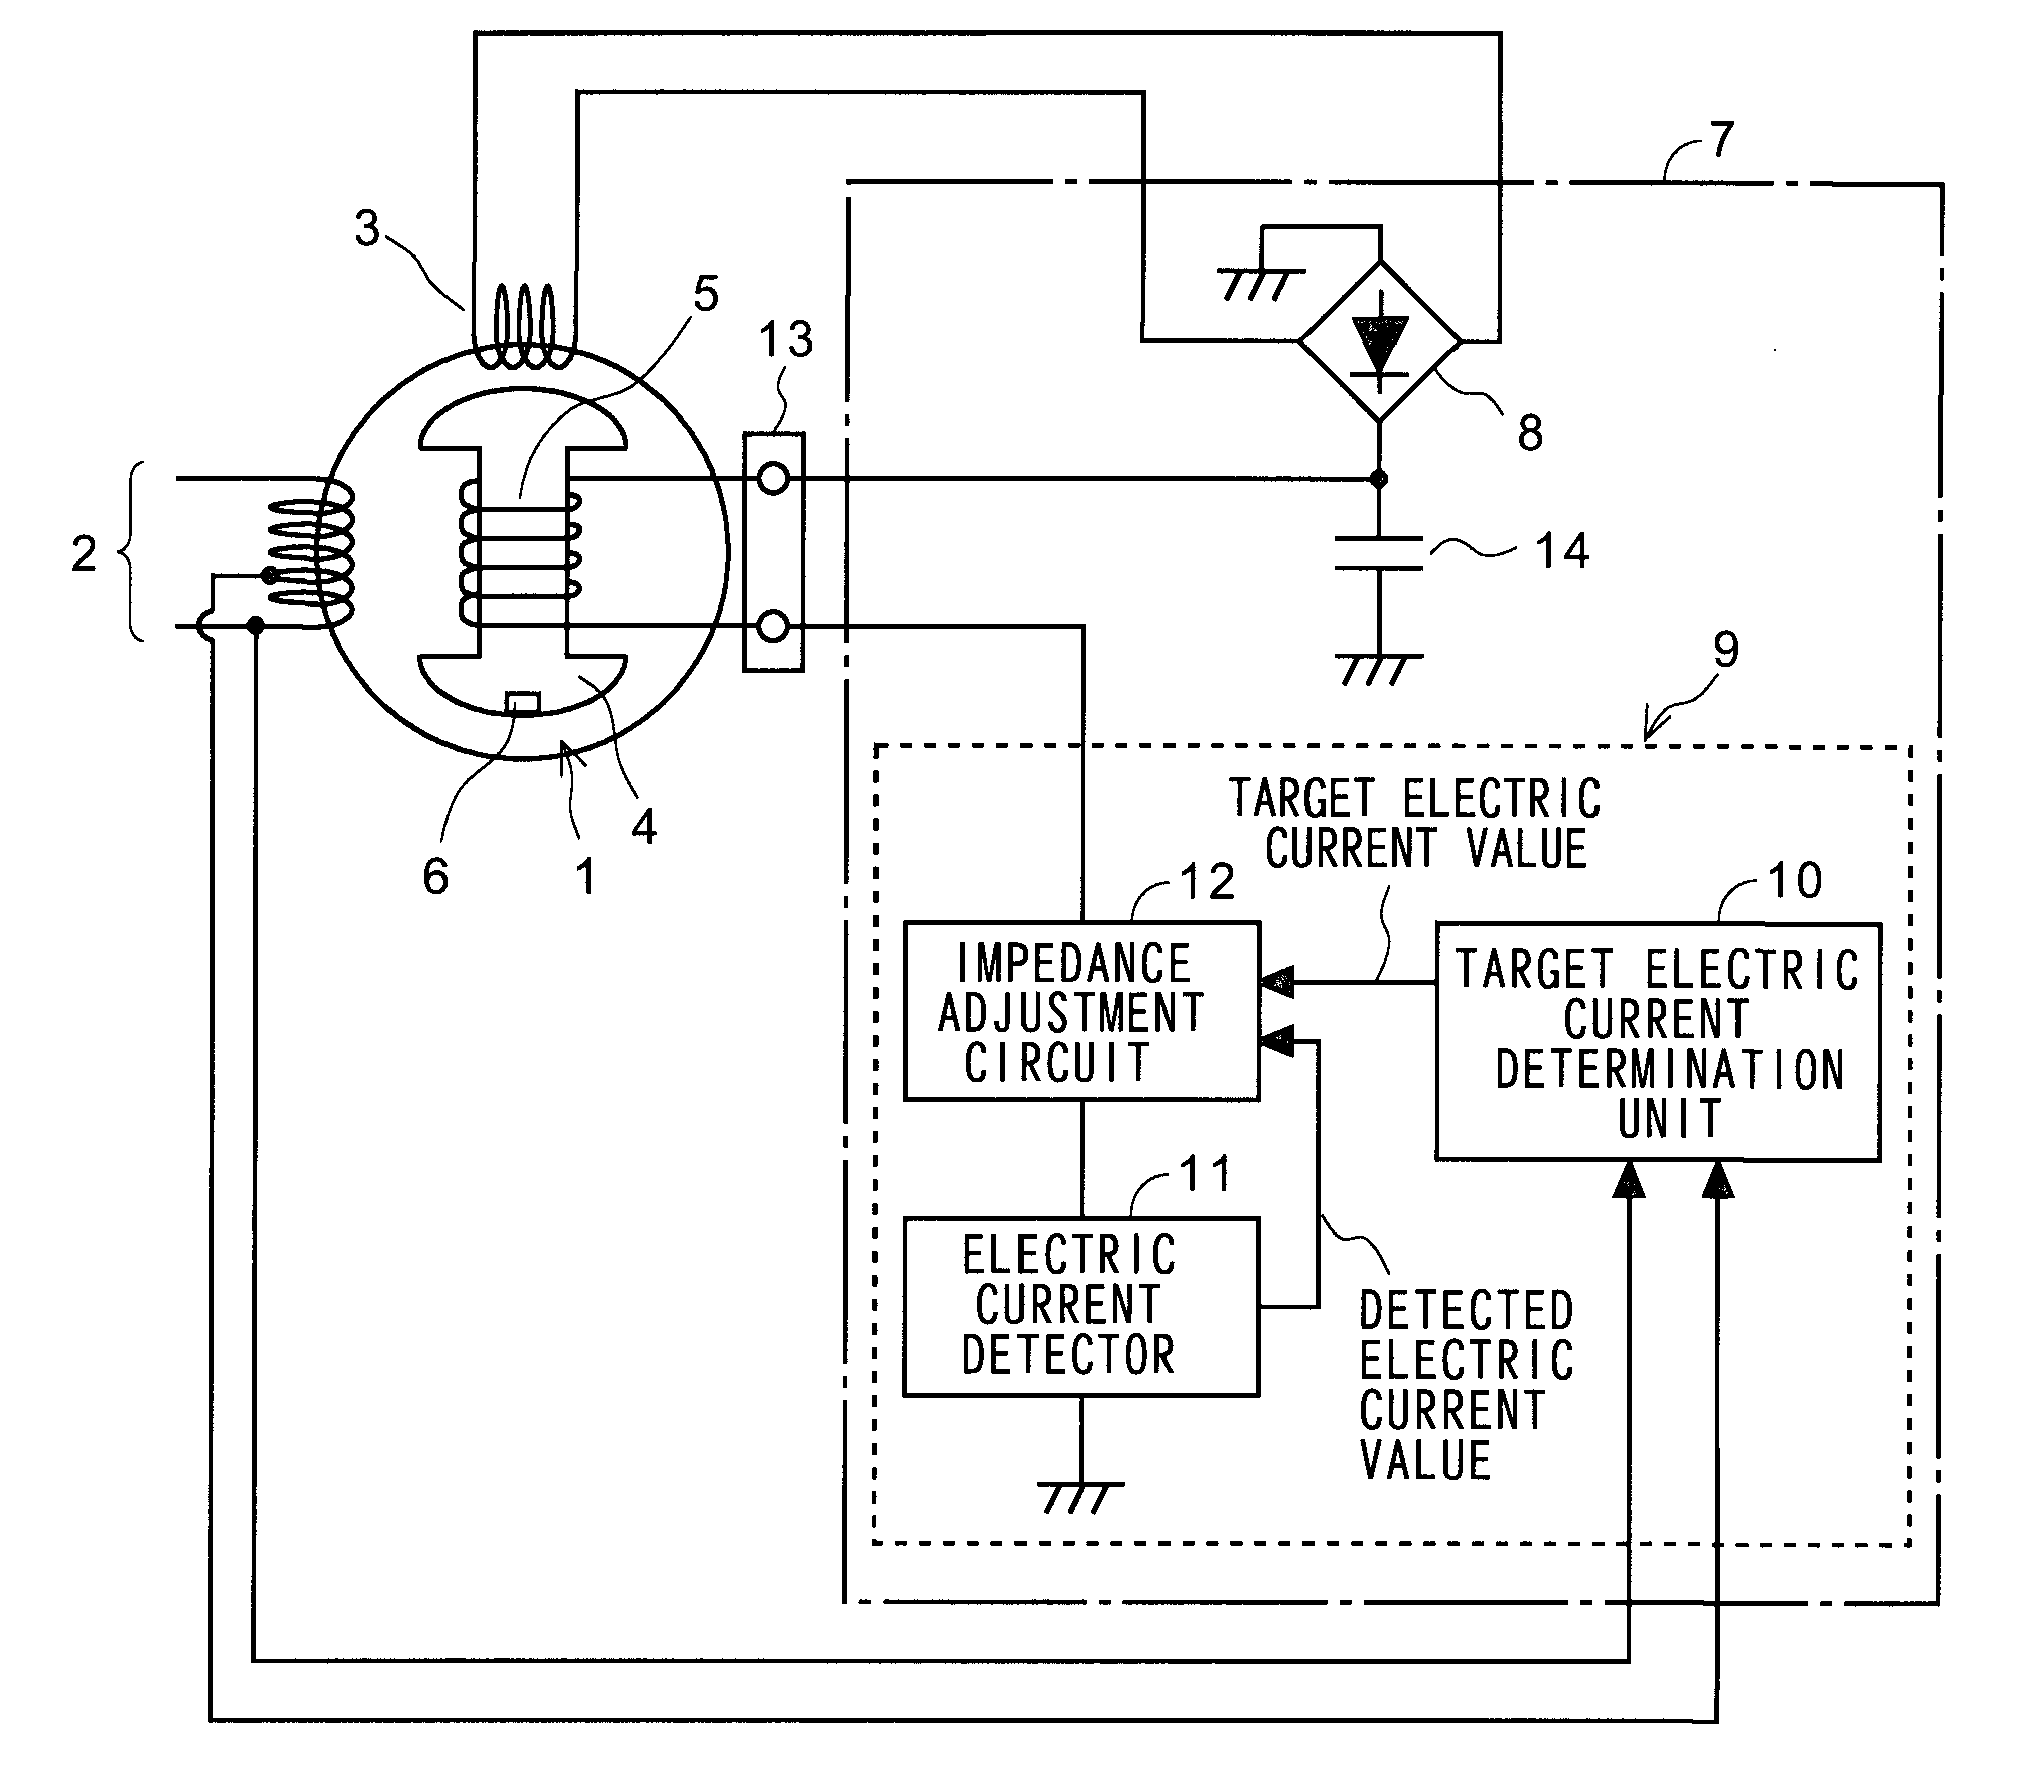 Output control apparatus of generator